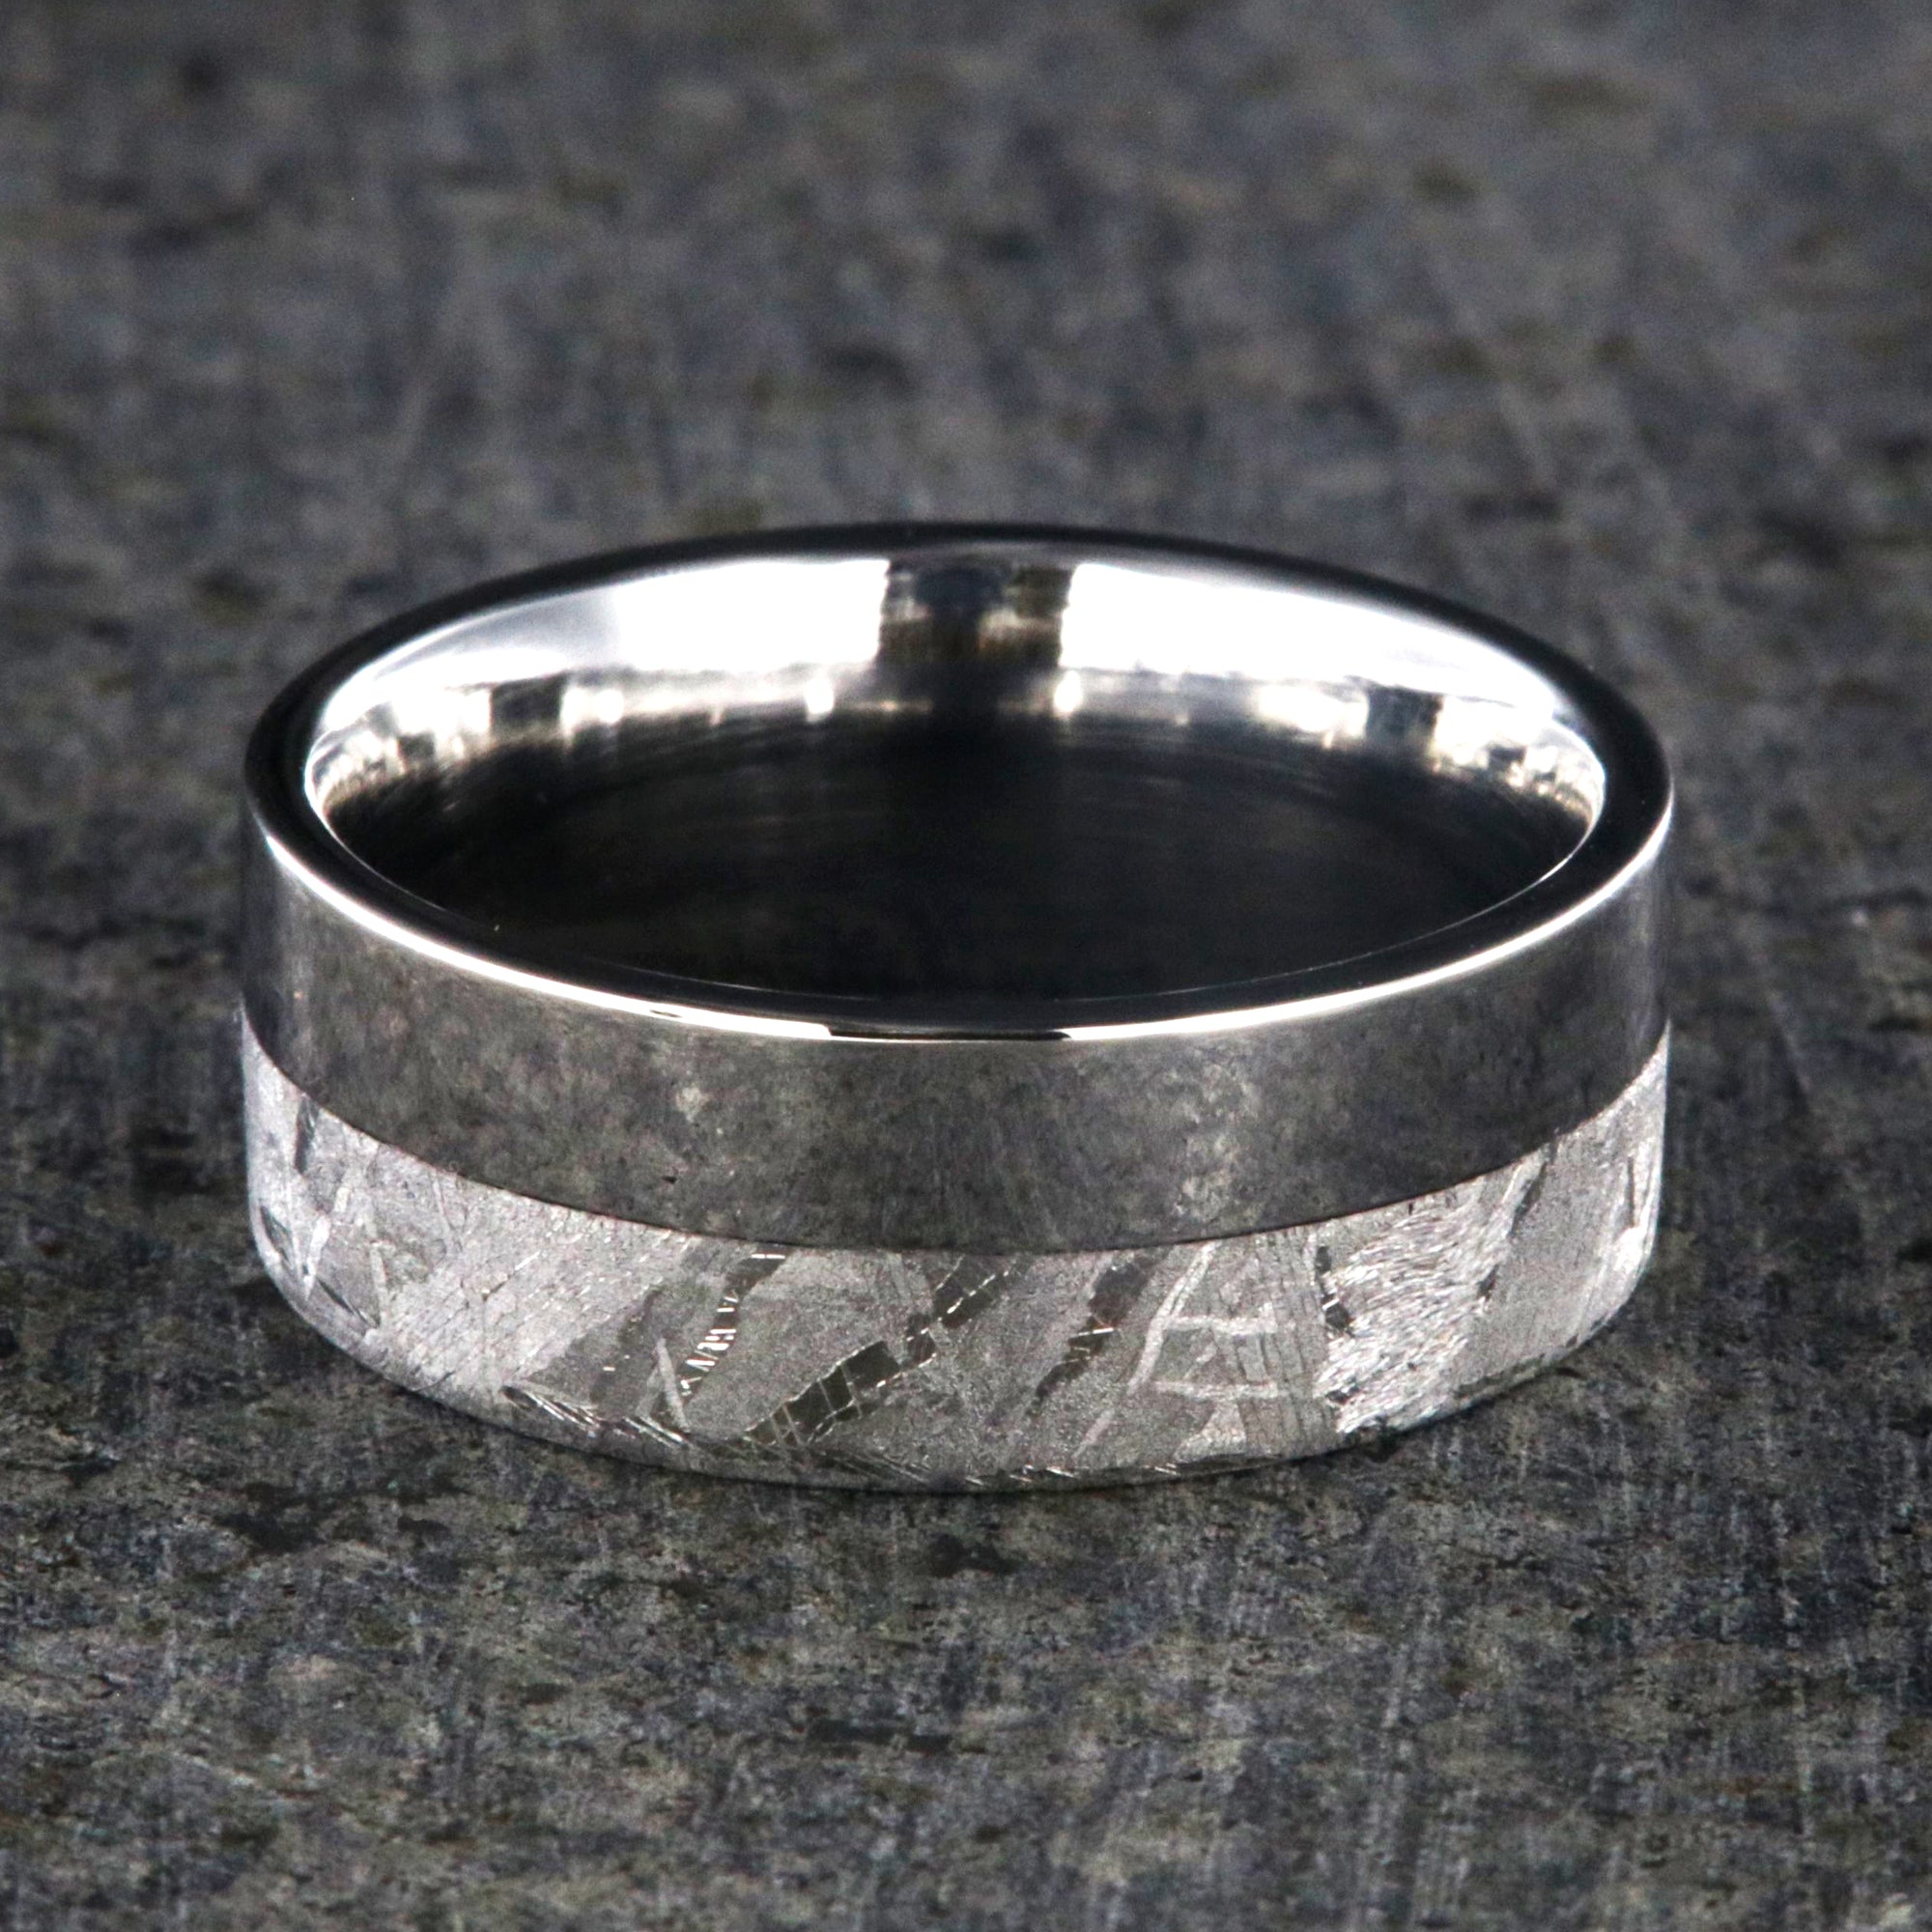 8mm wide men's wedding ring with half meteorite and half polished cobalt